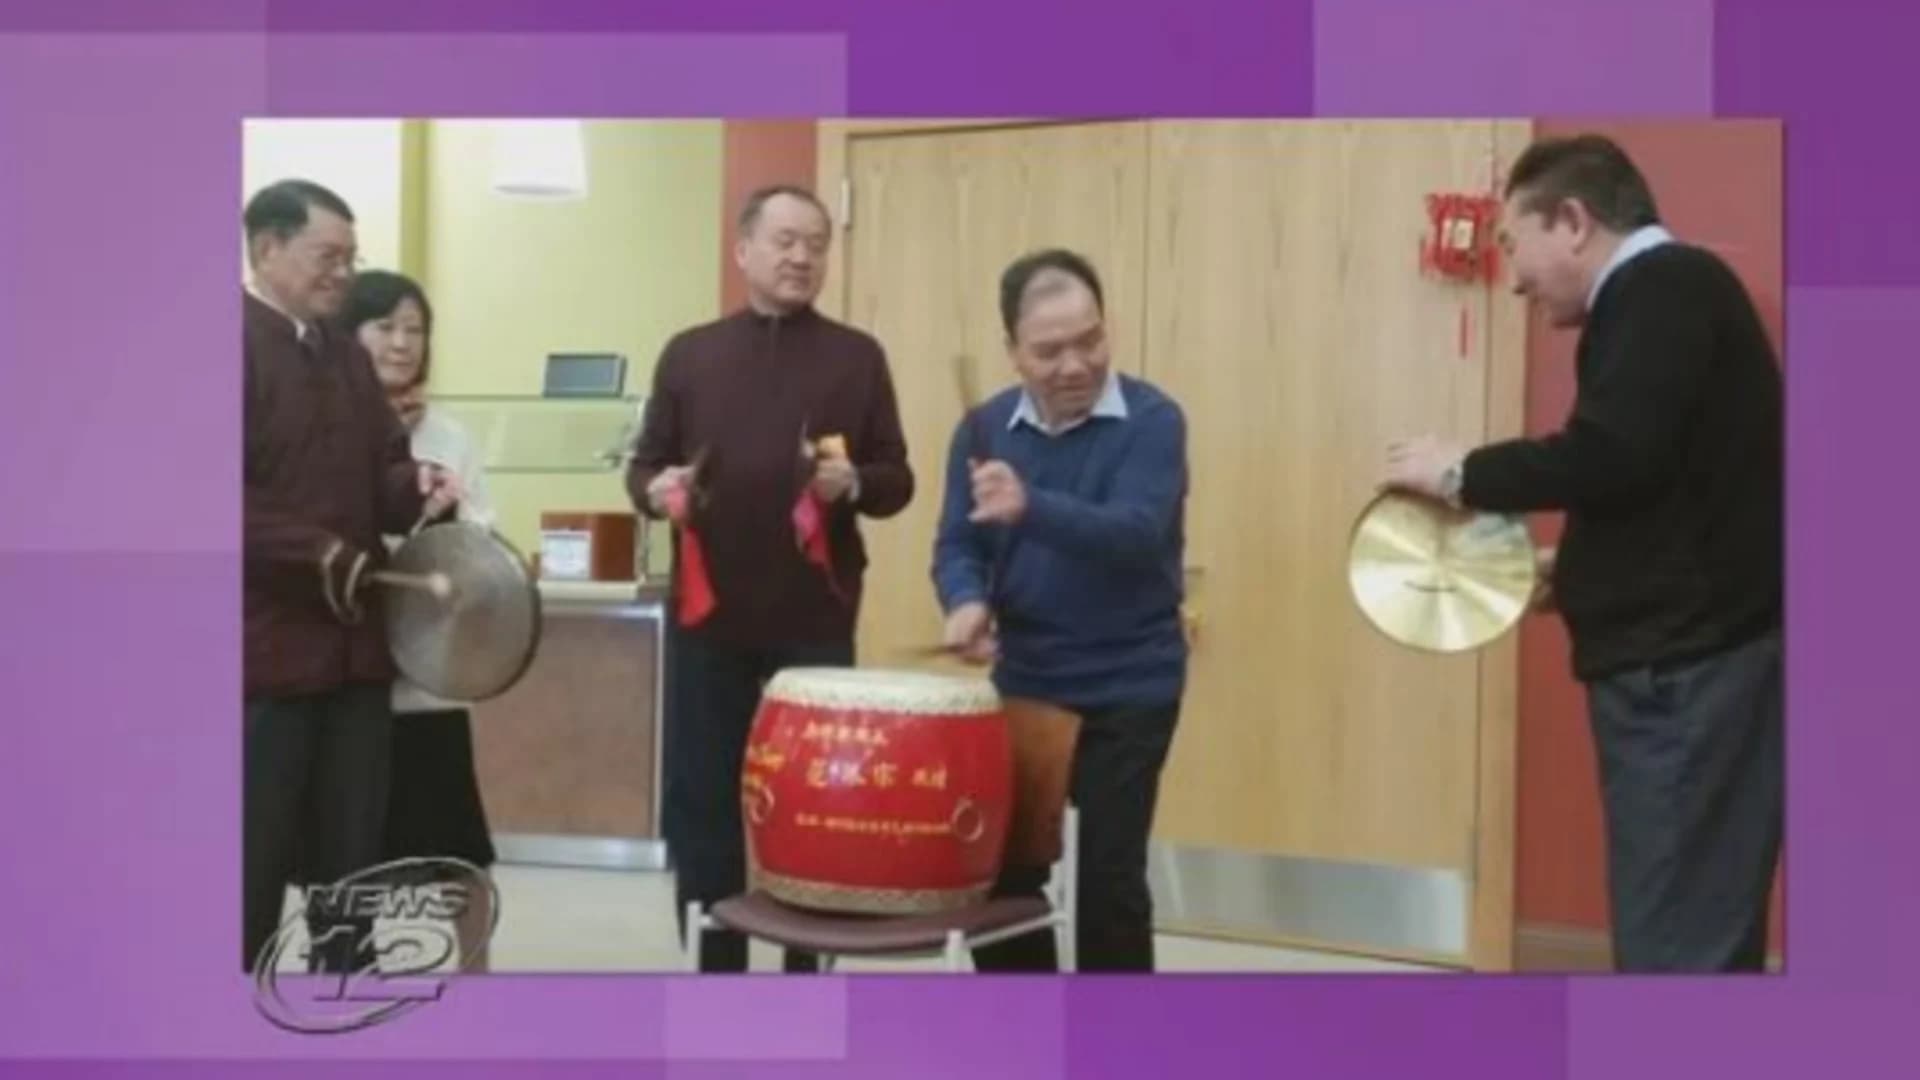 Spotlight New Jersey: New Jersey residents celebrate Chinese New Year